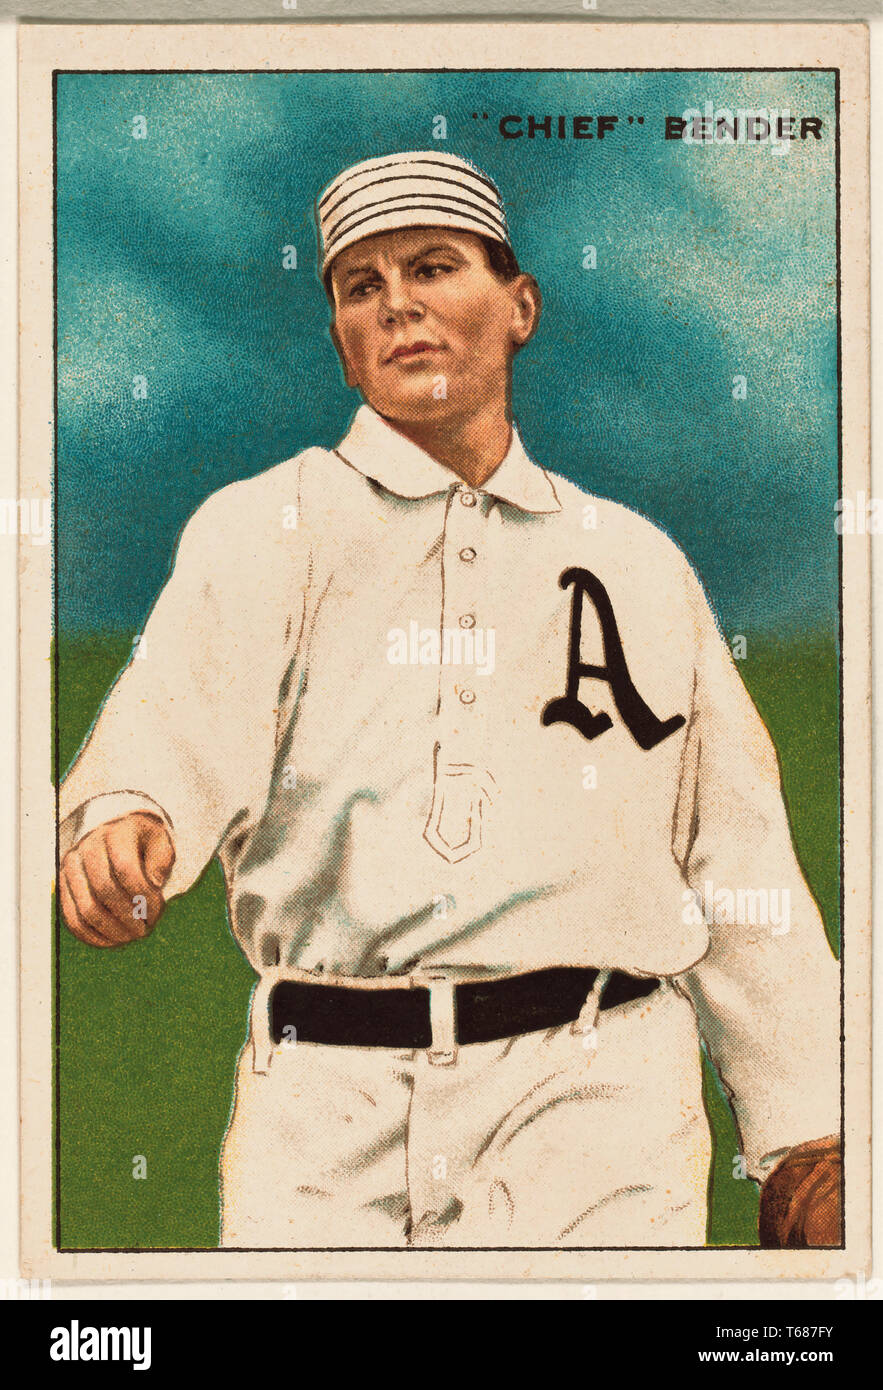 'Chief' Bender, Philadelphia Athletics, Baseball Card Portrait, 1912 Stock Photo